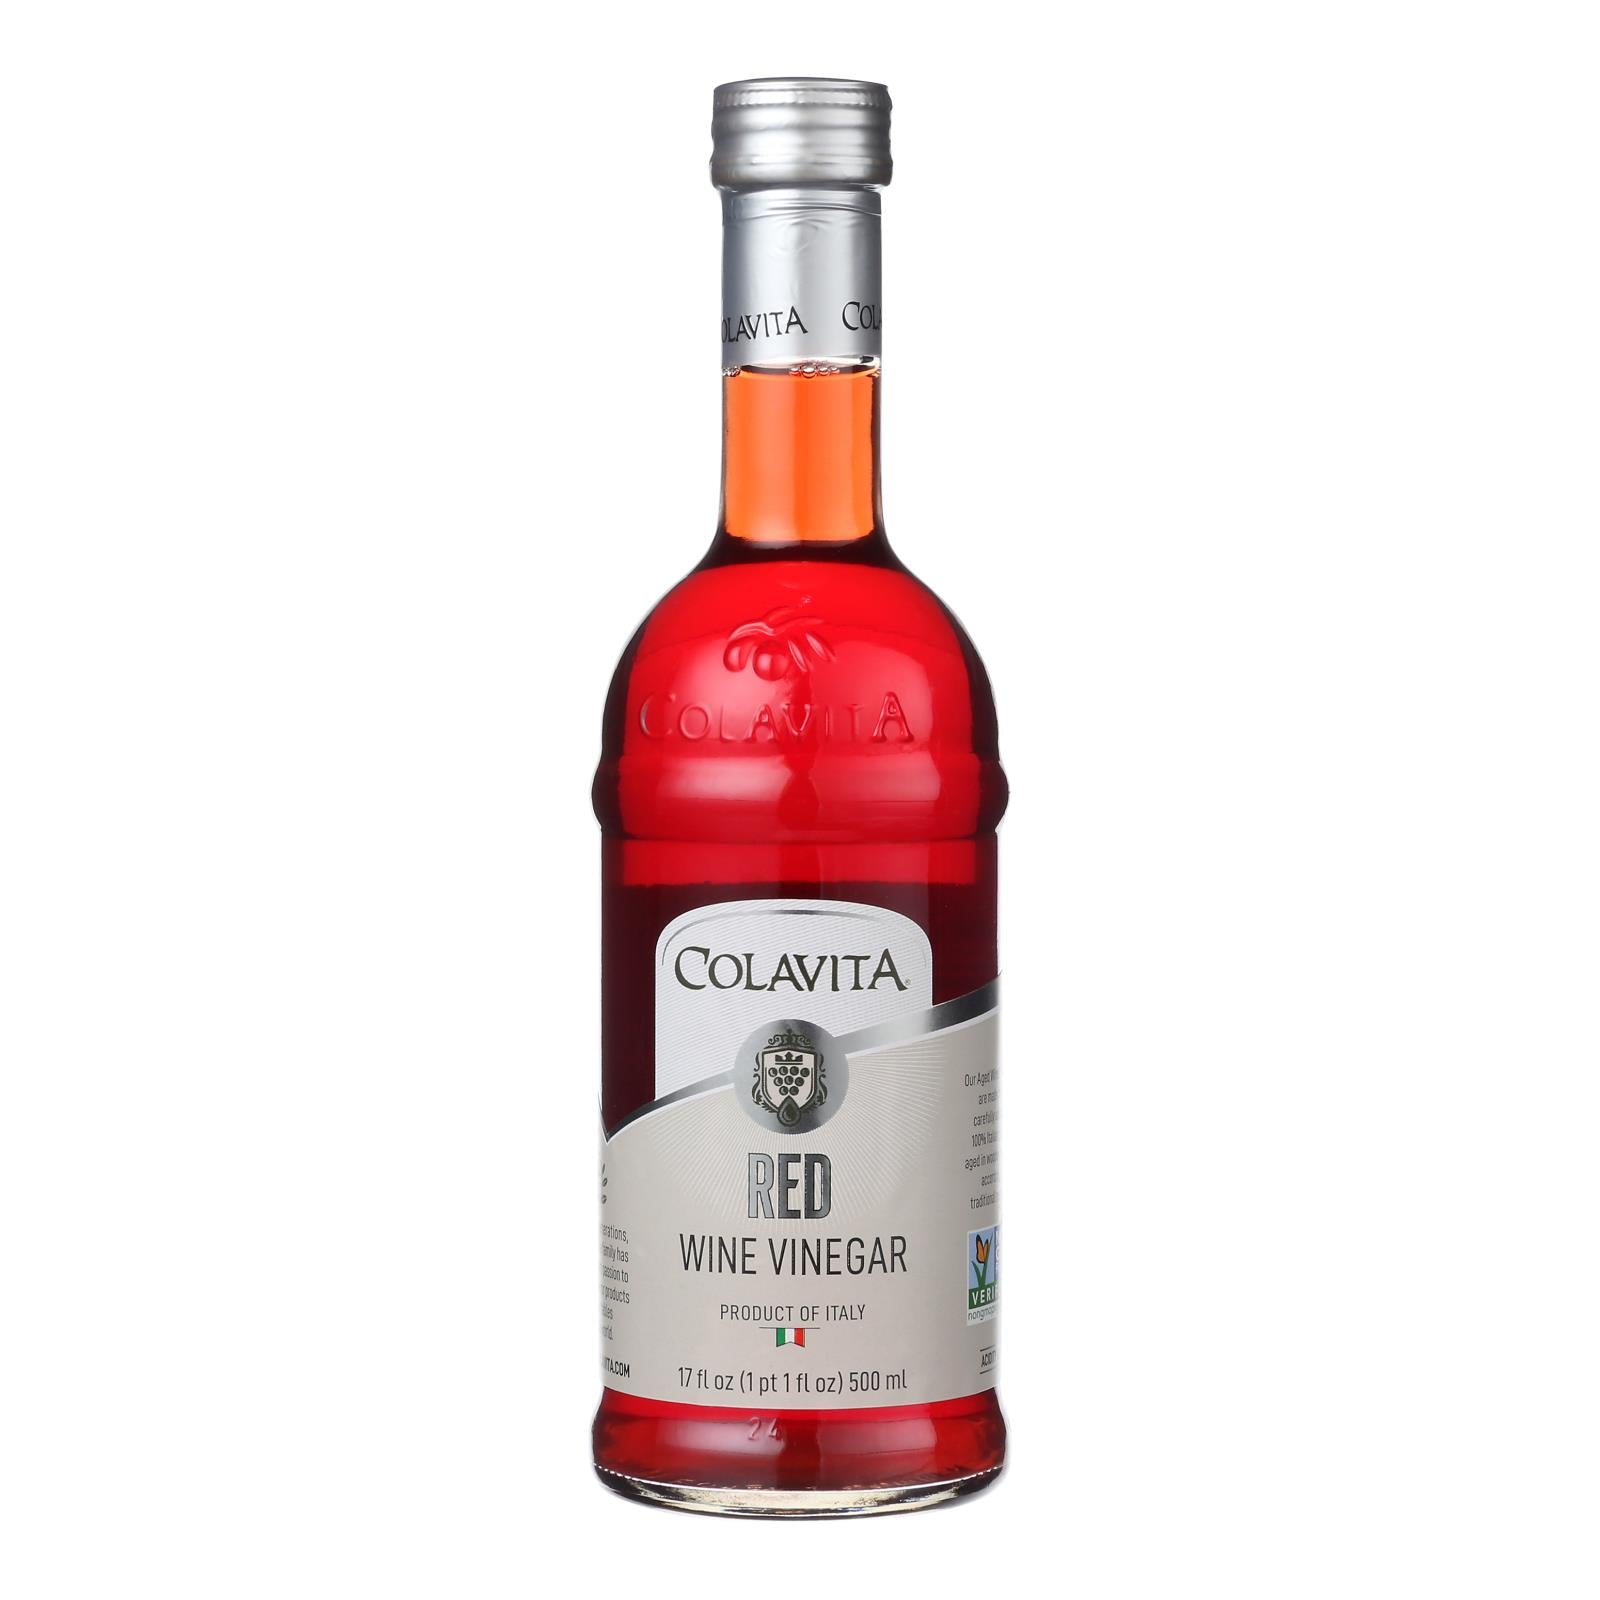 Colavita - Aged Red Wine Vinegar - Case Of 12 - 17 Fl Oz.